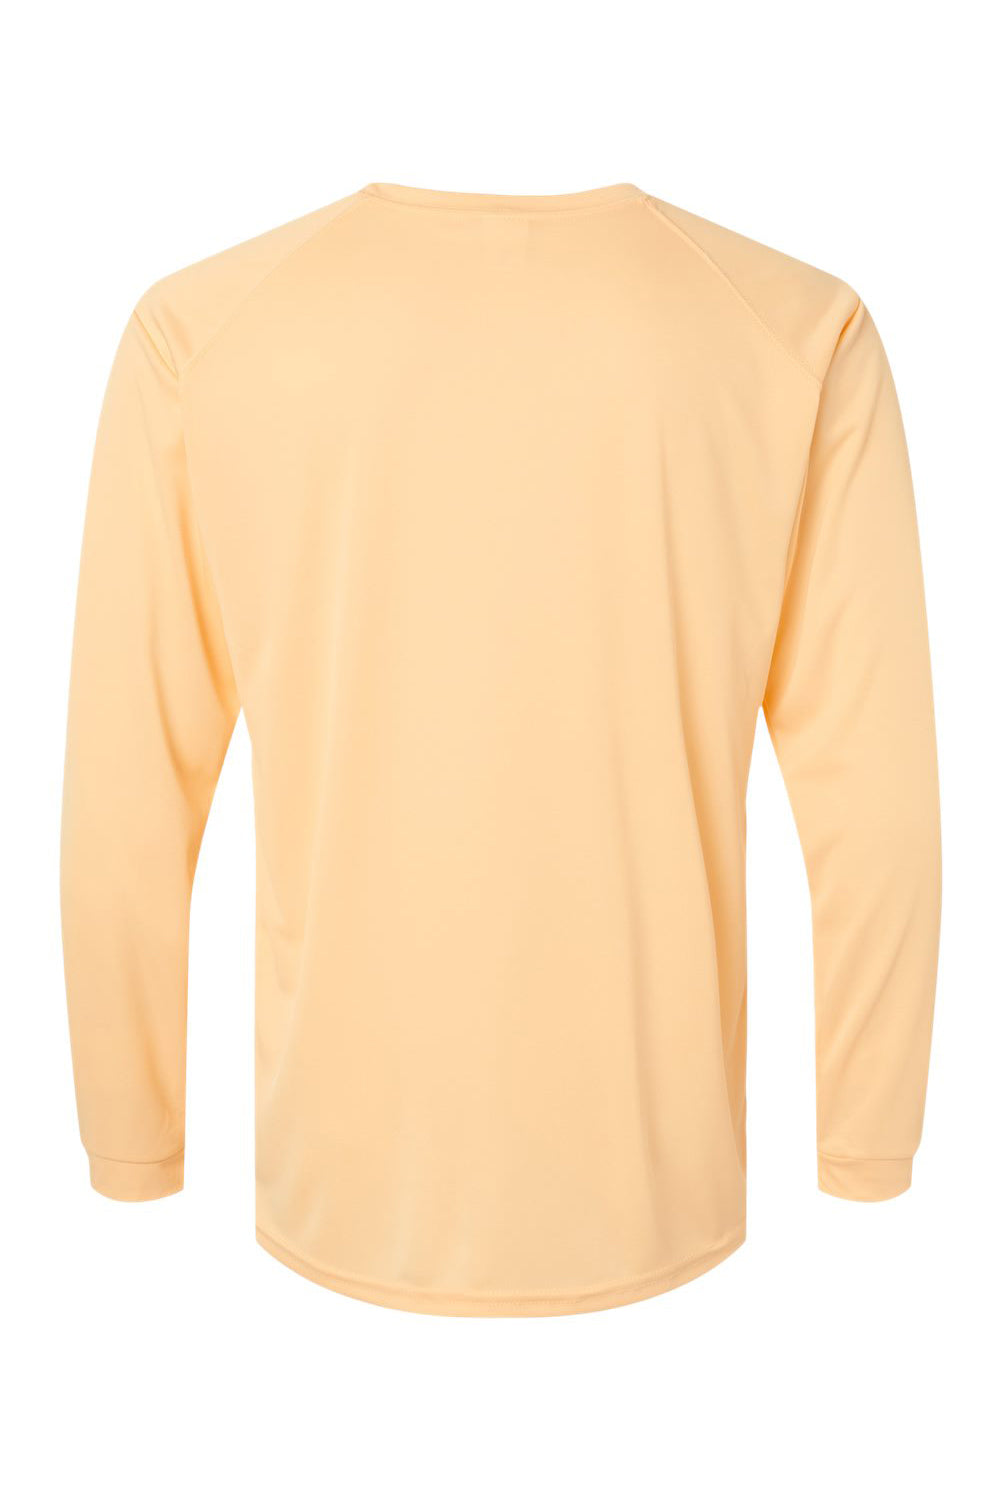 Paragon 210 Mens Islander Performance Long Sleeve Crewneck T-Shirt Peach Flat Back